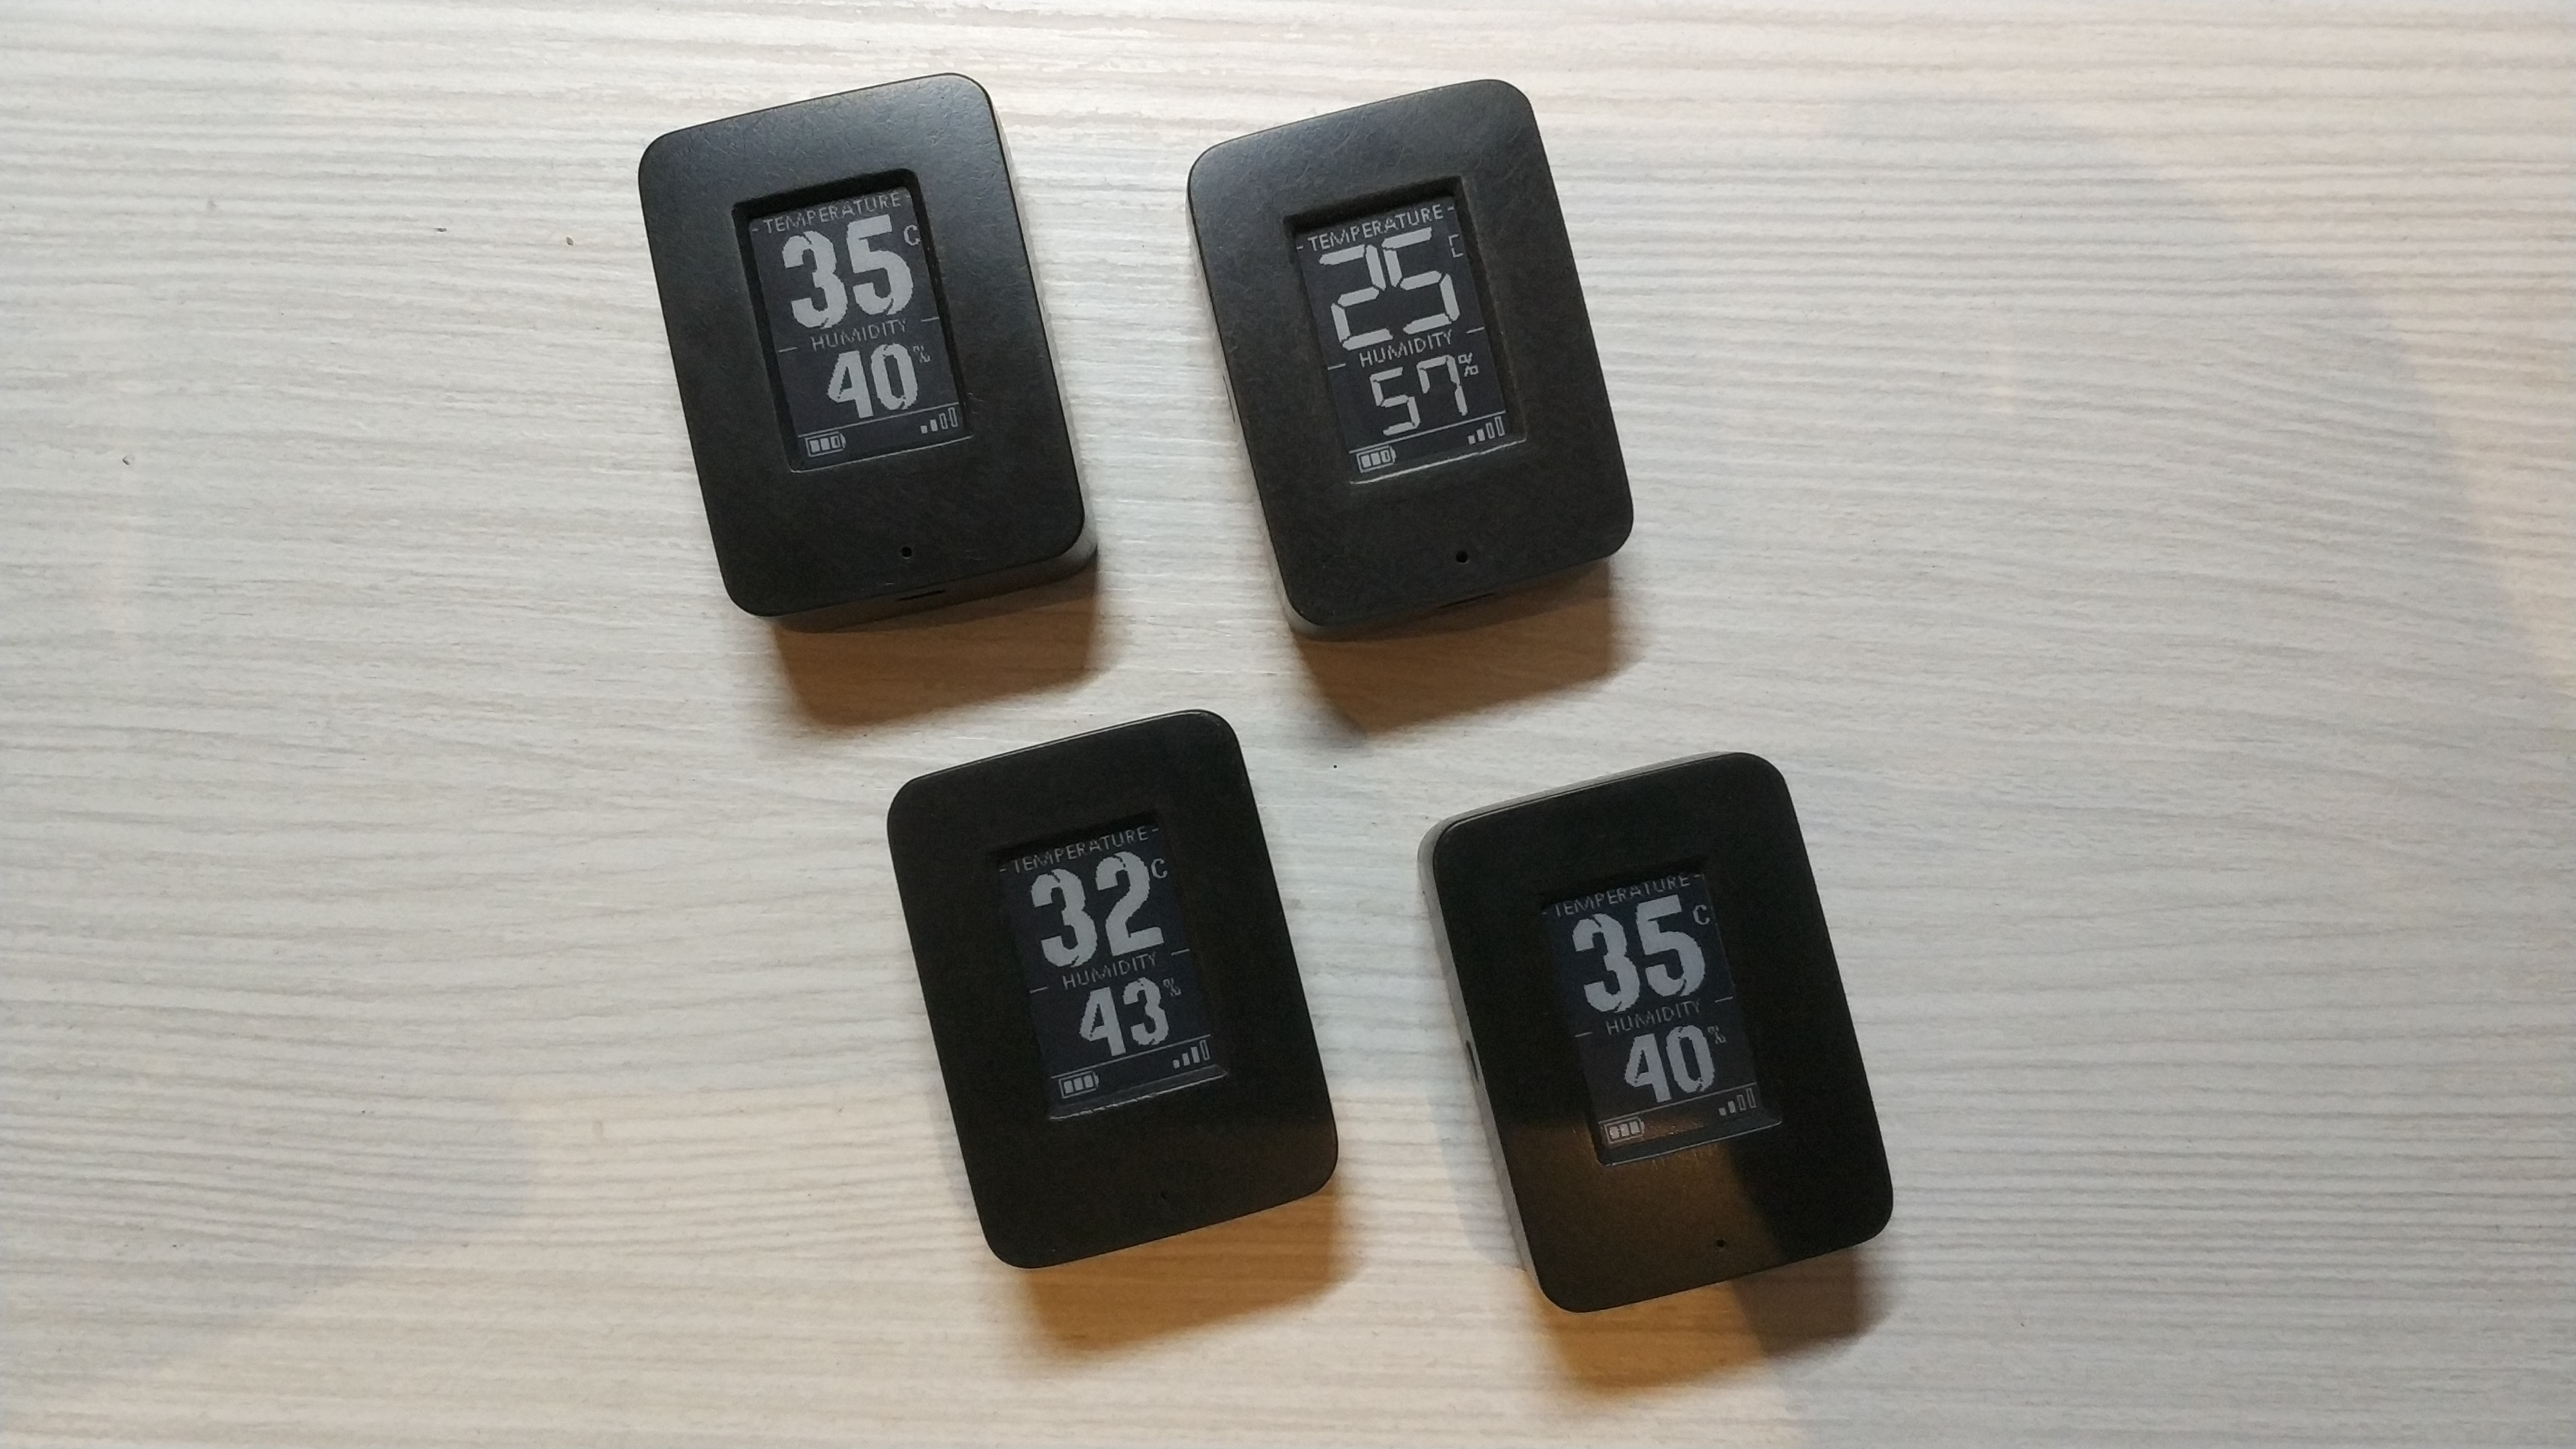 adafruit-Bluetooth eInk Display Clock with Temperature Humidity Sensor